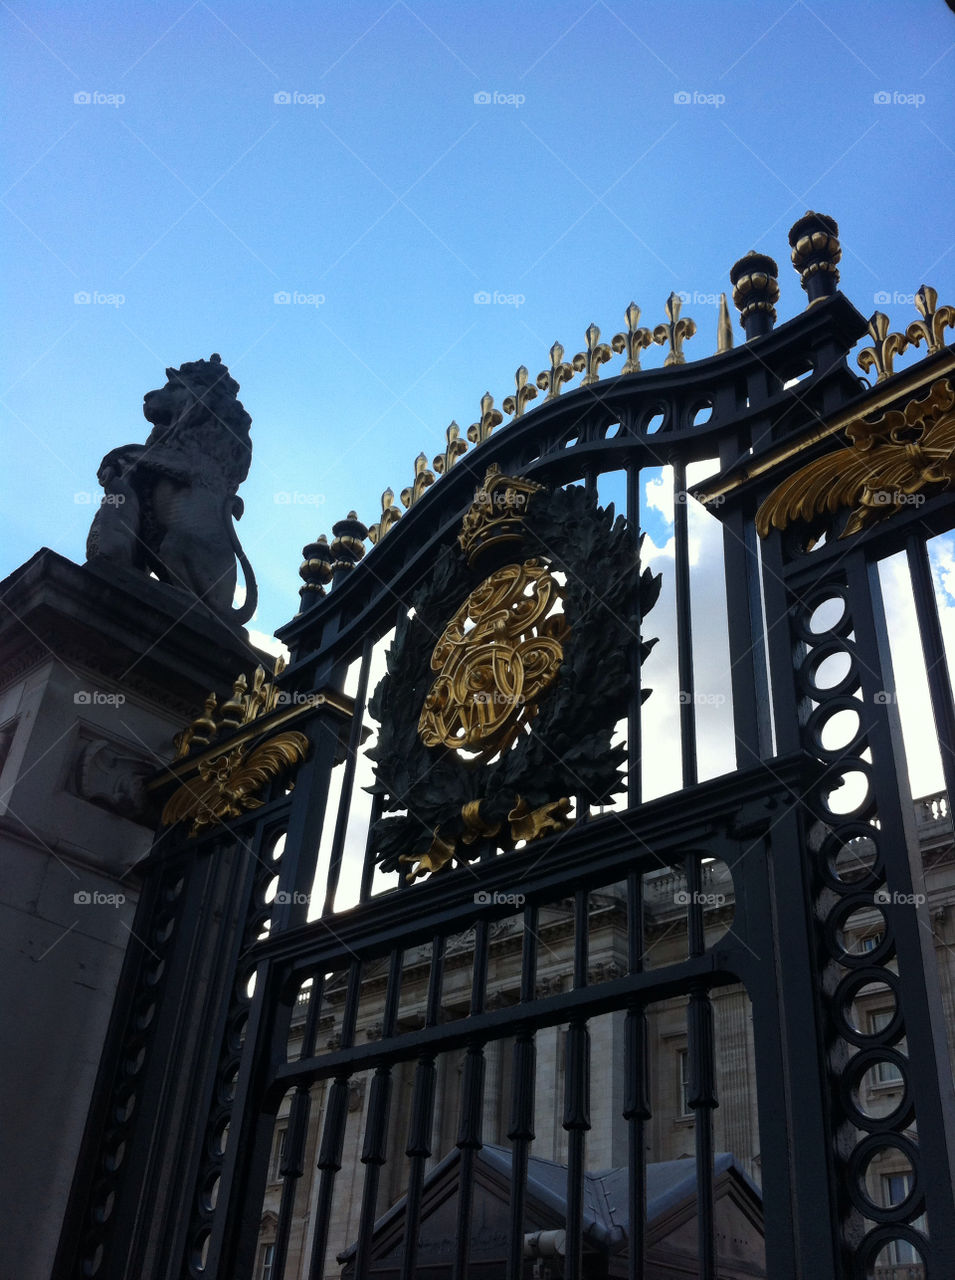 power landmark buckingham palace gate by craig_franklin